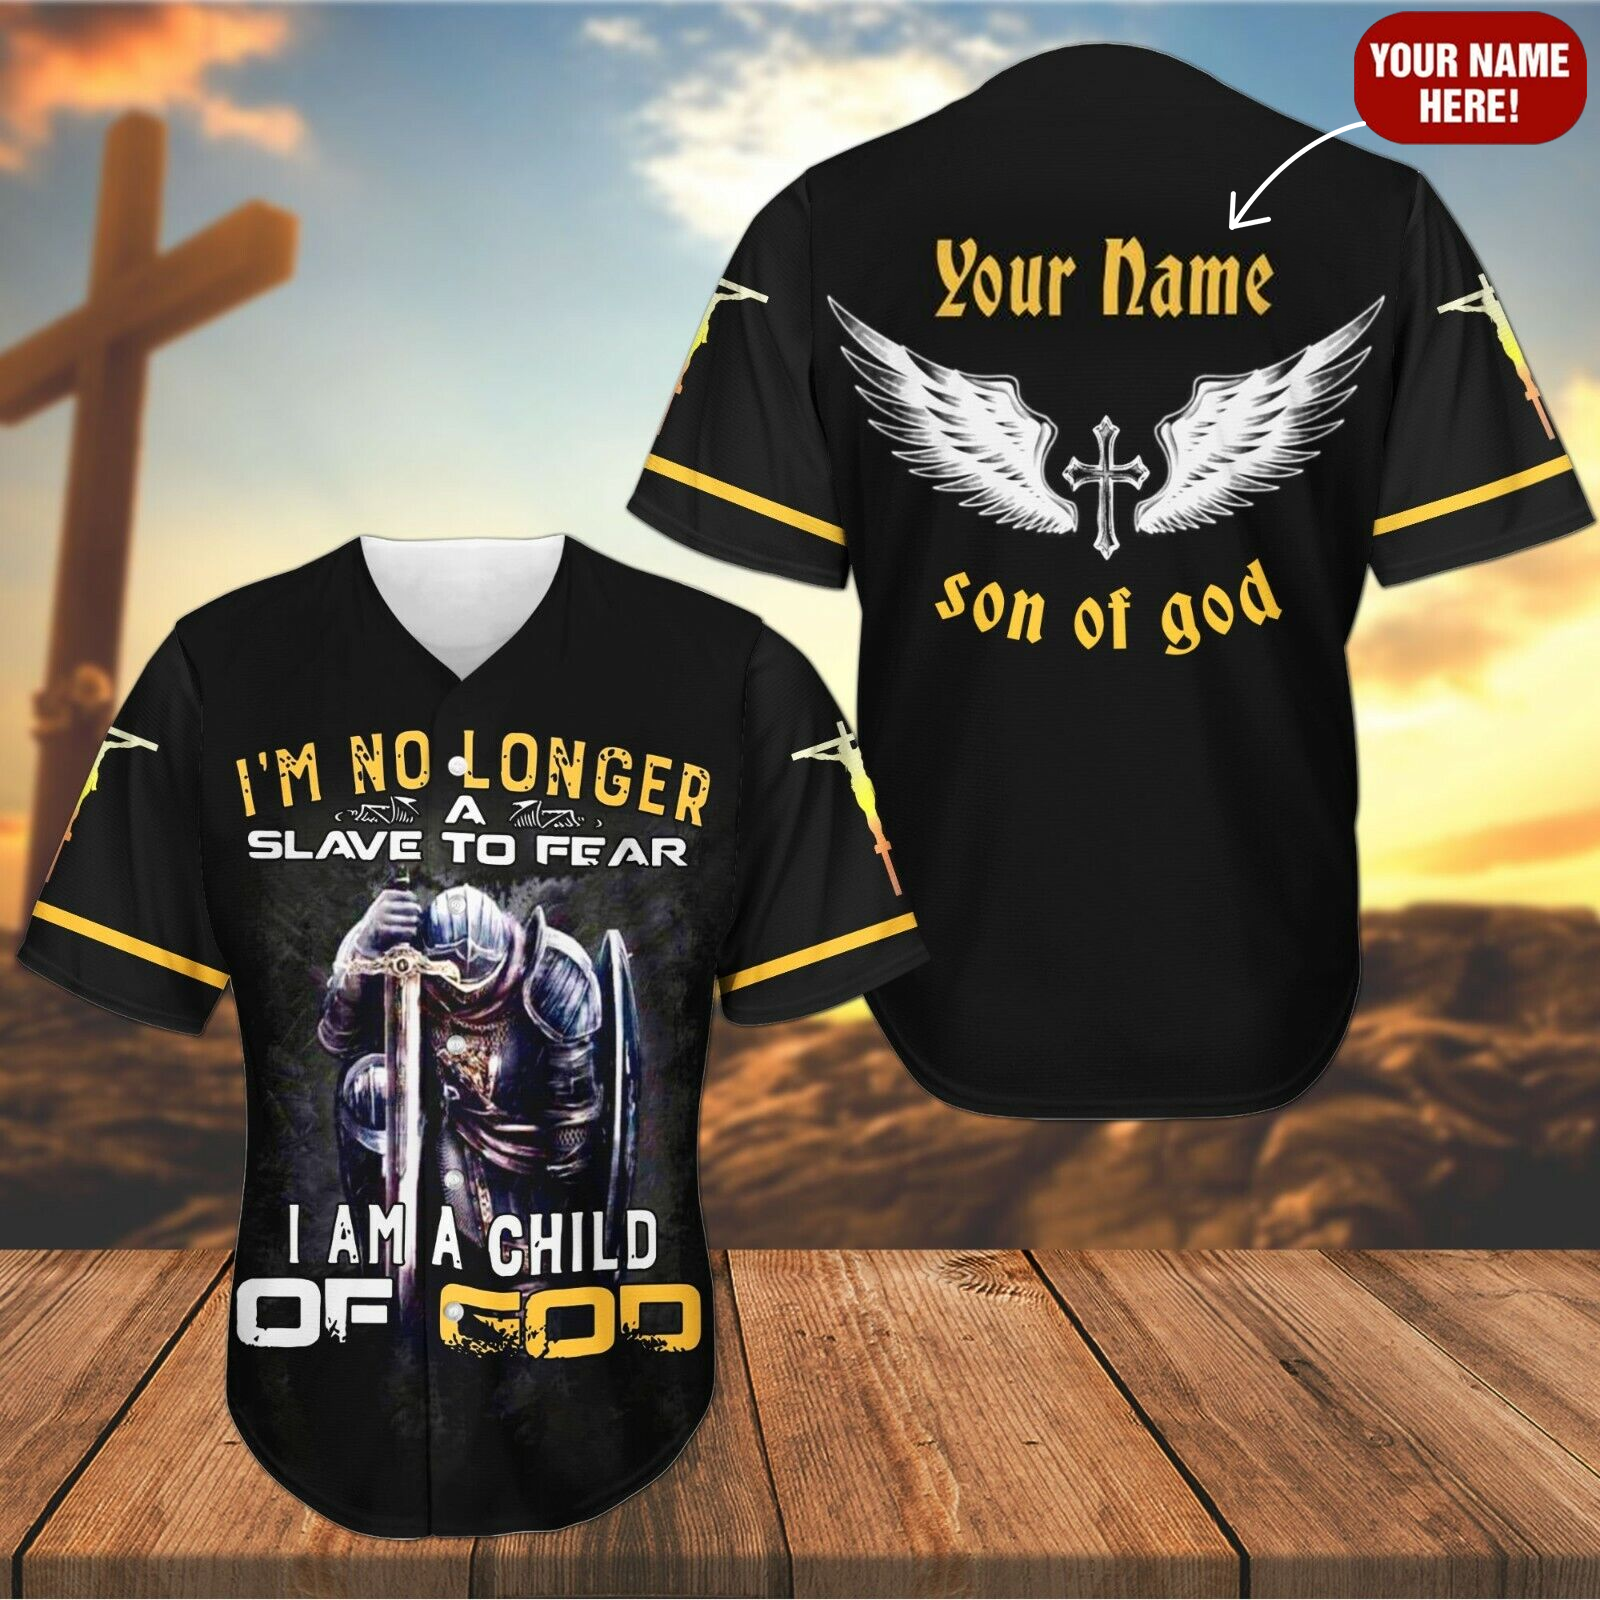 Personalized Jesus Baseball Jersey - Cross Angel Wings Baseball Jersey - Gift For Christians - Child Of God Custom Baseball Jersey Shirt For Men Women